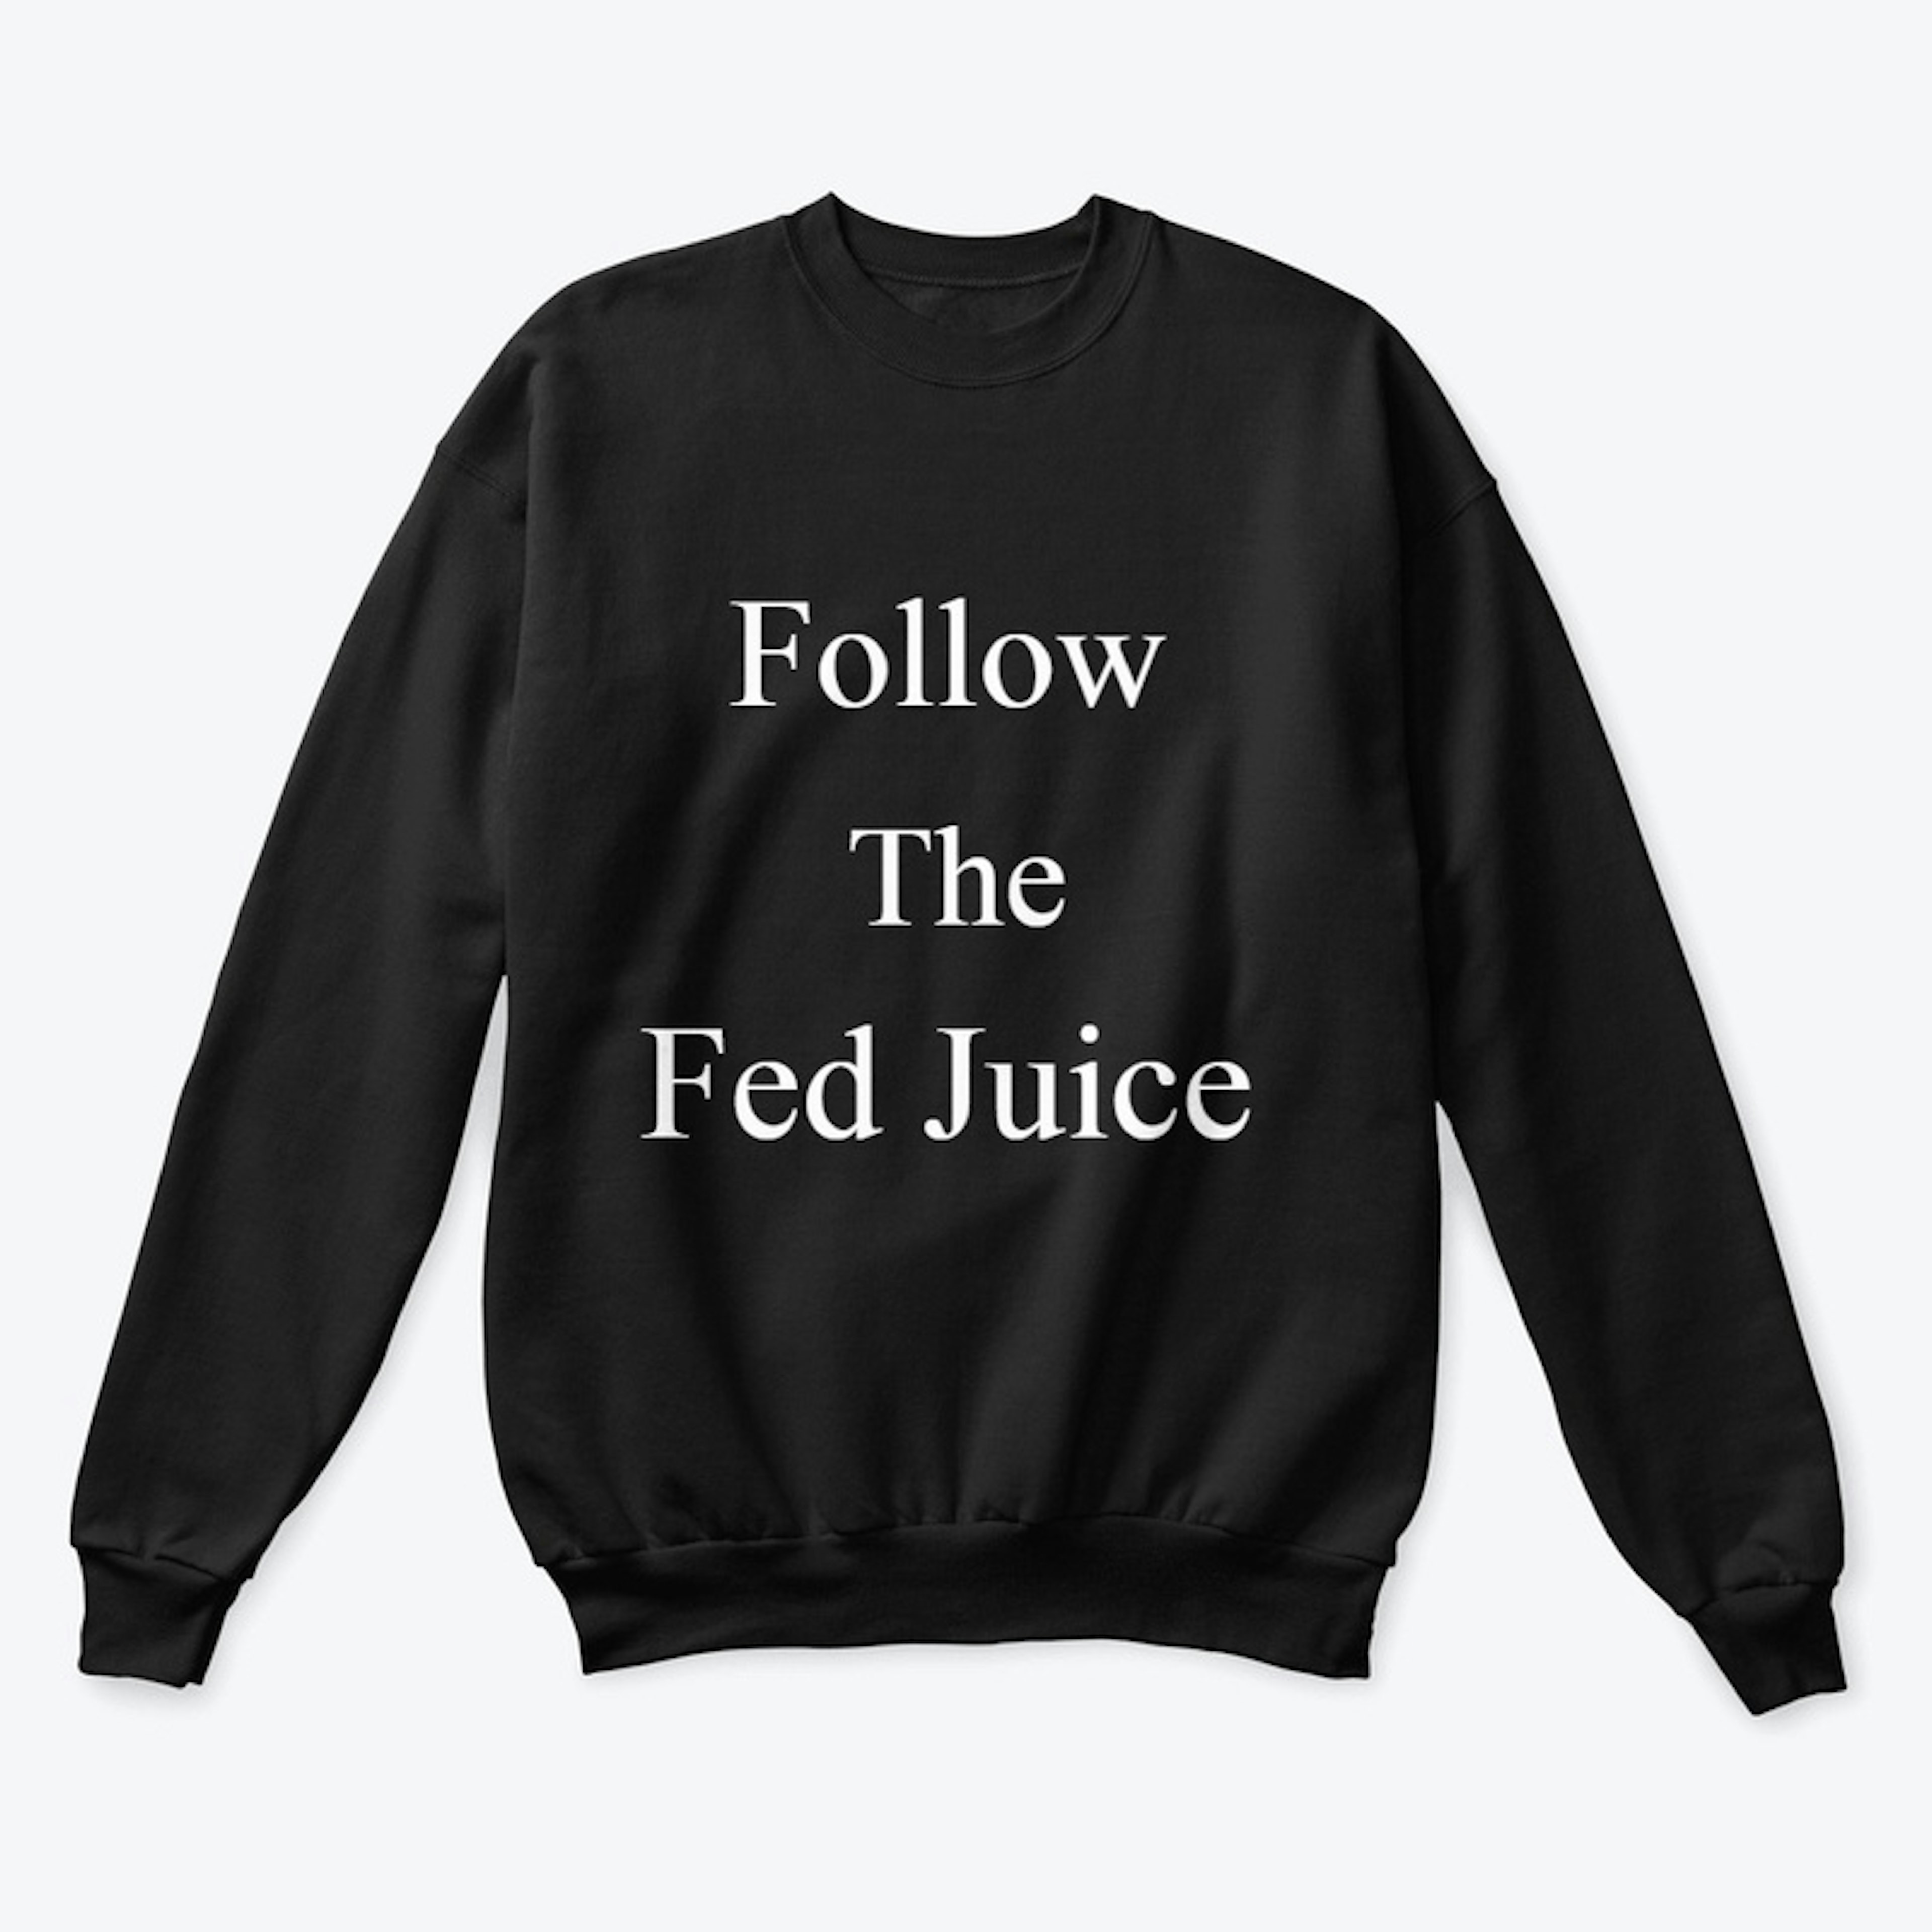 Follow the Fed Juice